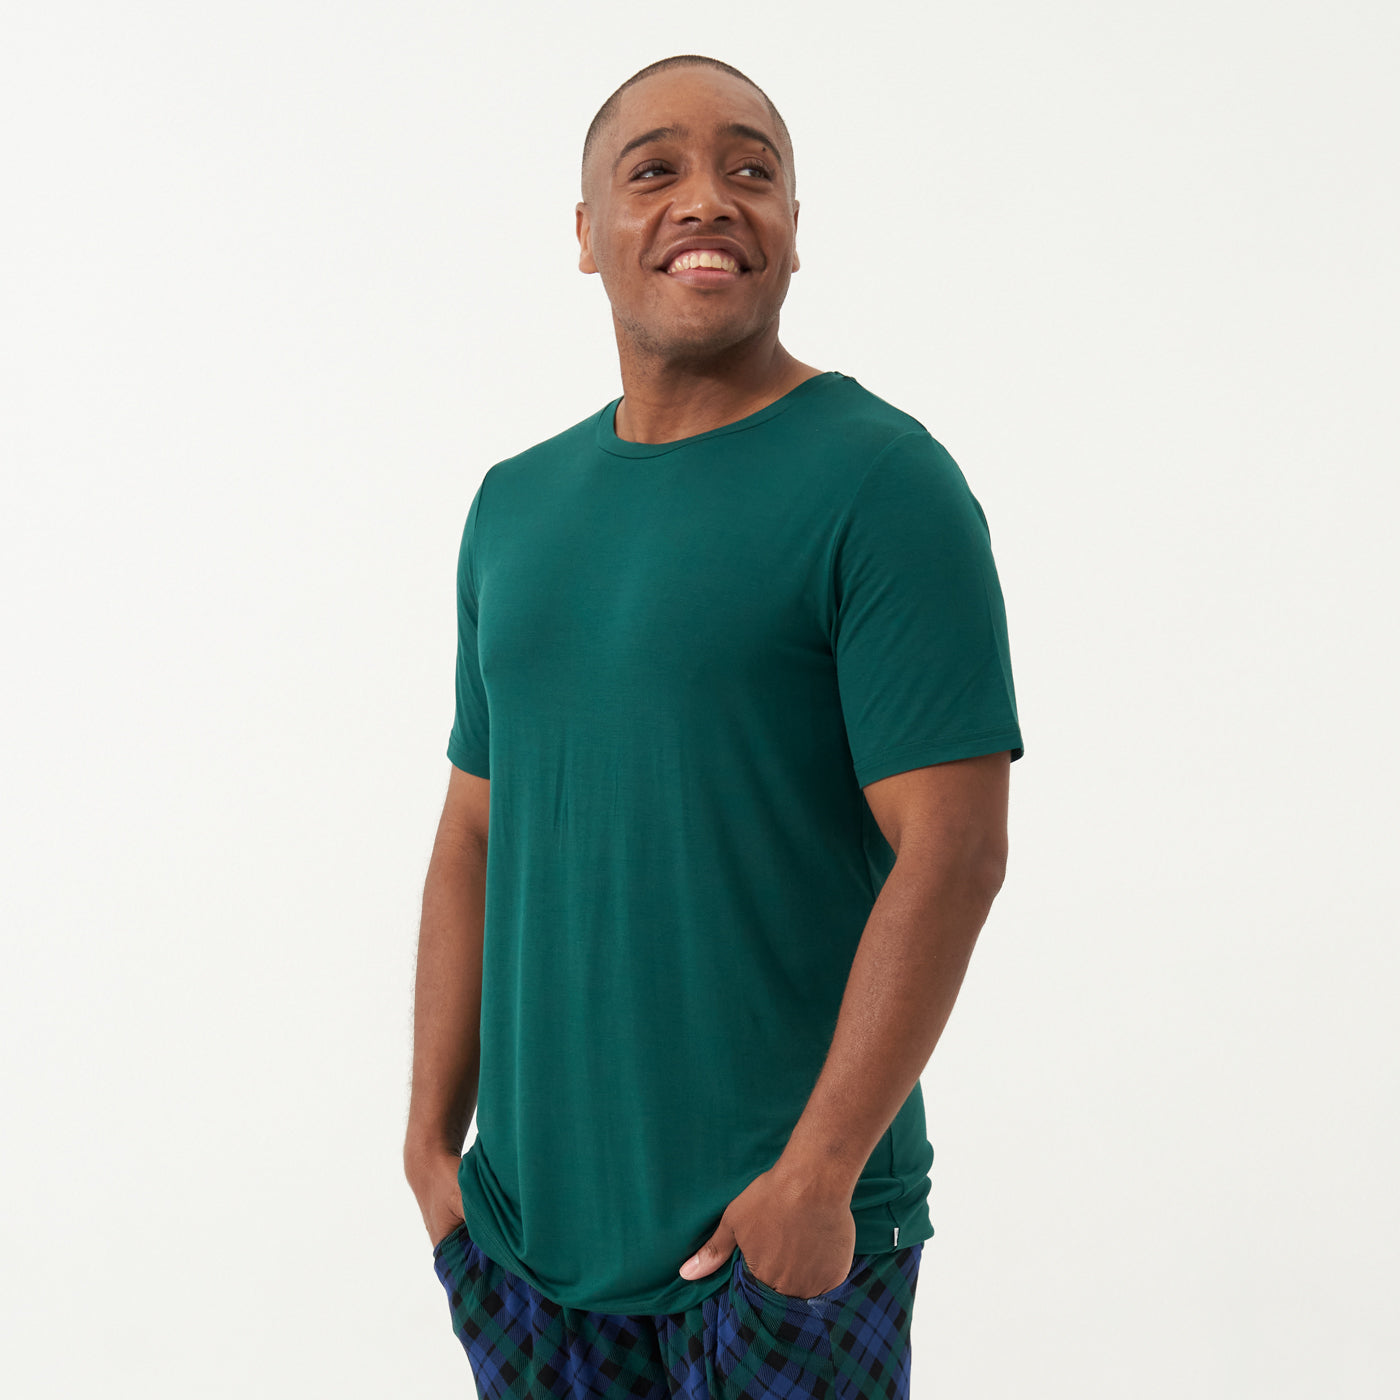 Alternate image of a man wearing an Emerald men's short sleeve pajama top and coordinating pants